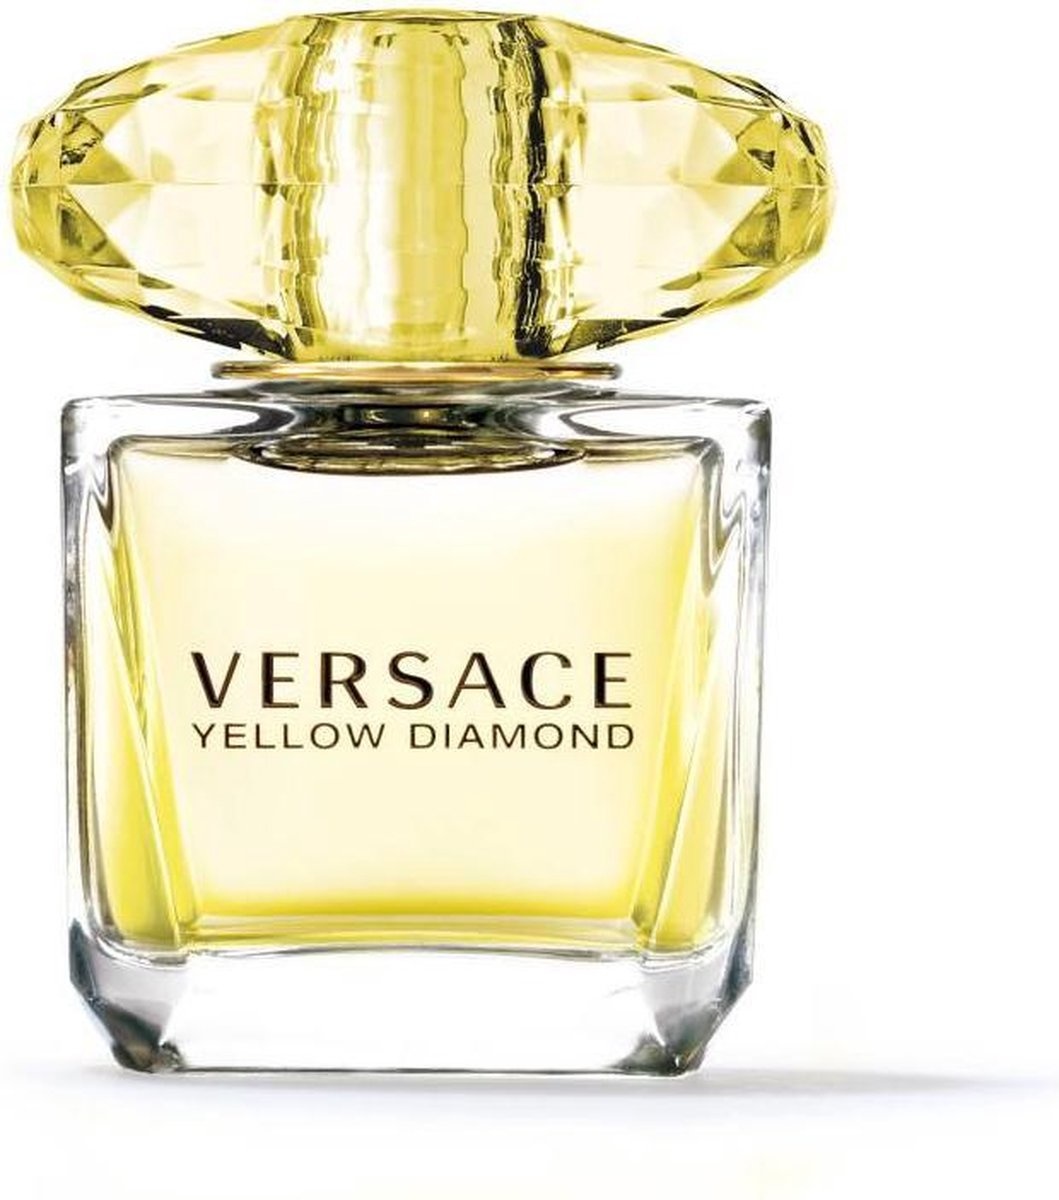 Versace Yellow Diamond für Damen - 30 ml - Eau de Toilette